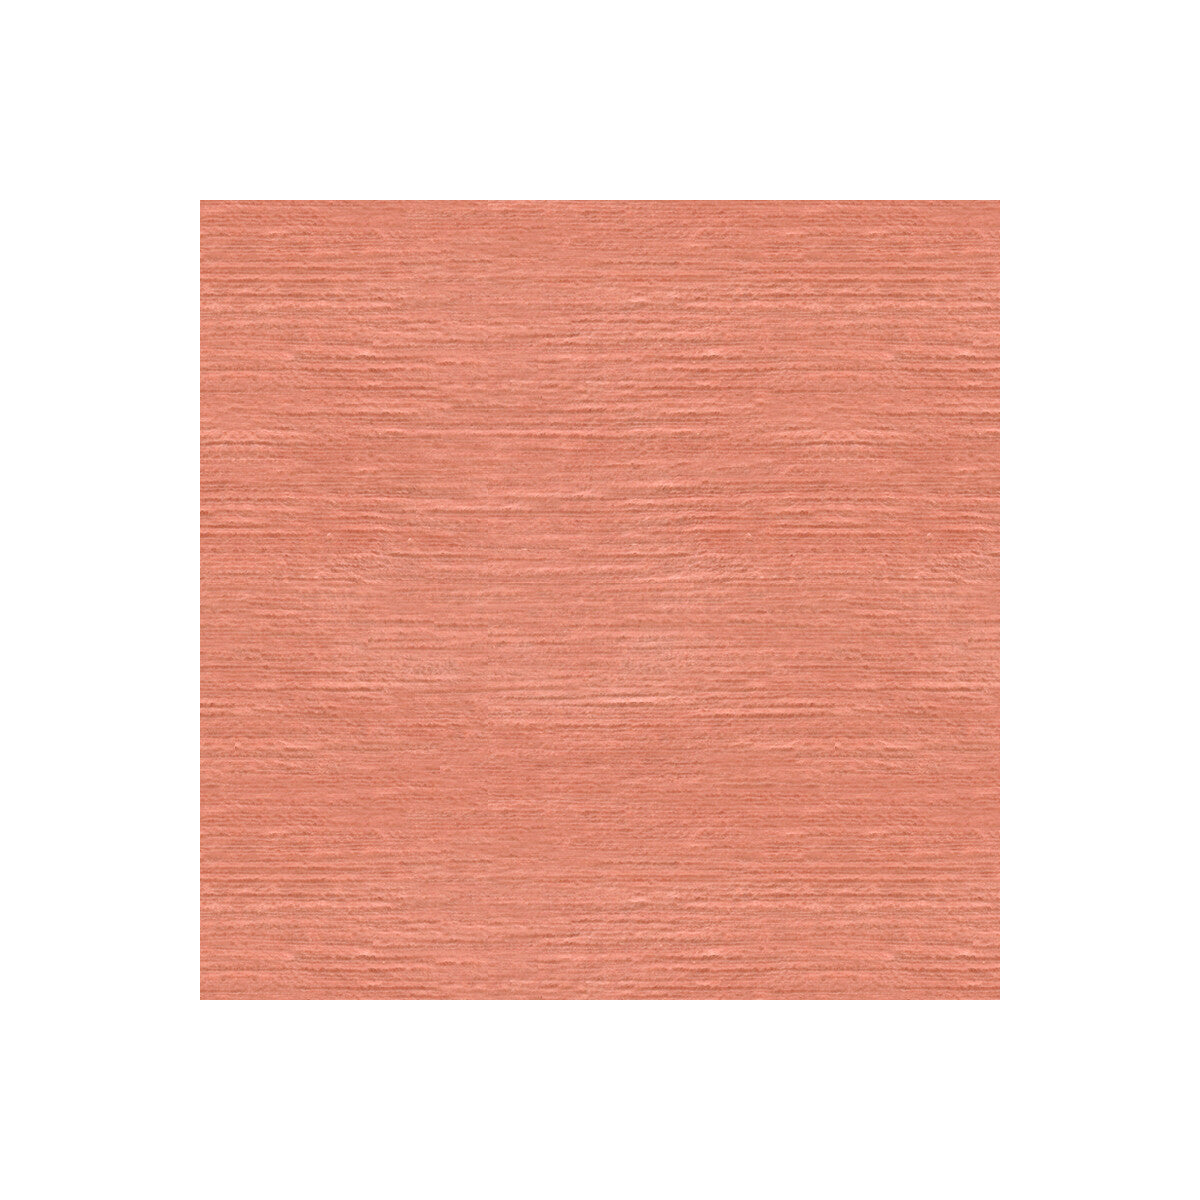 Thanon Linen Velvet fabric in rose quartz color - pattern BR-89776.104.0 - by Brunschwig &amp; Fils